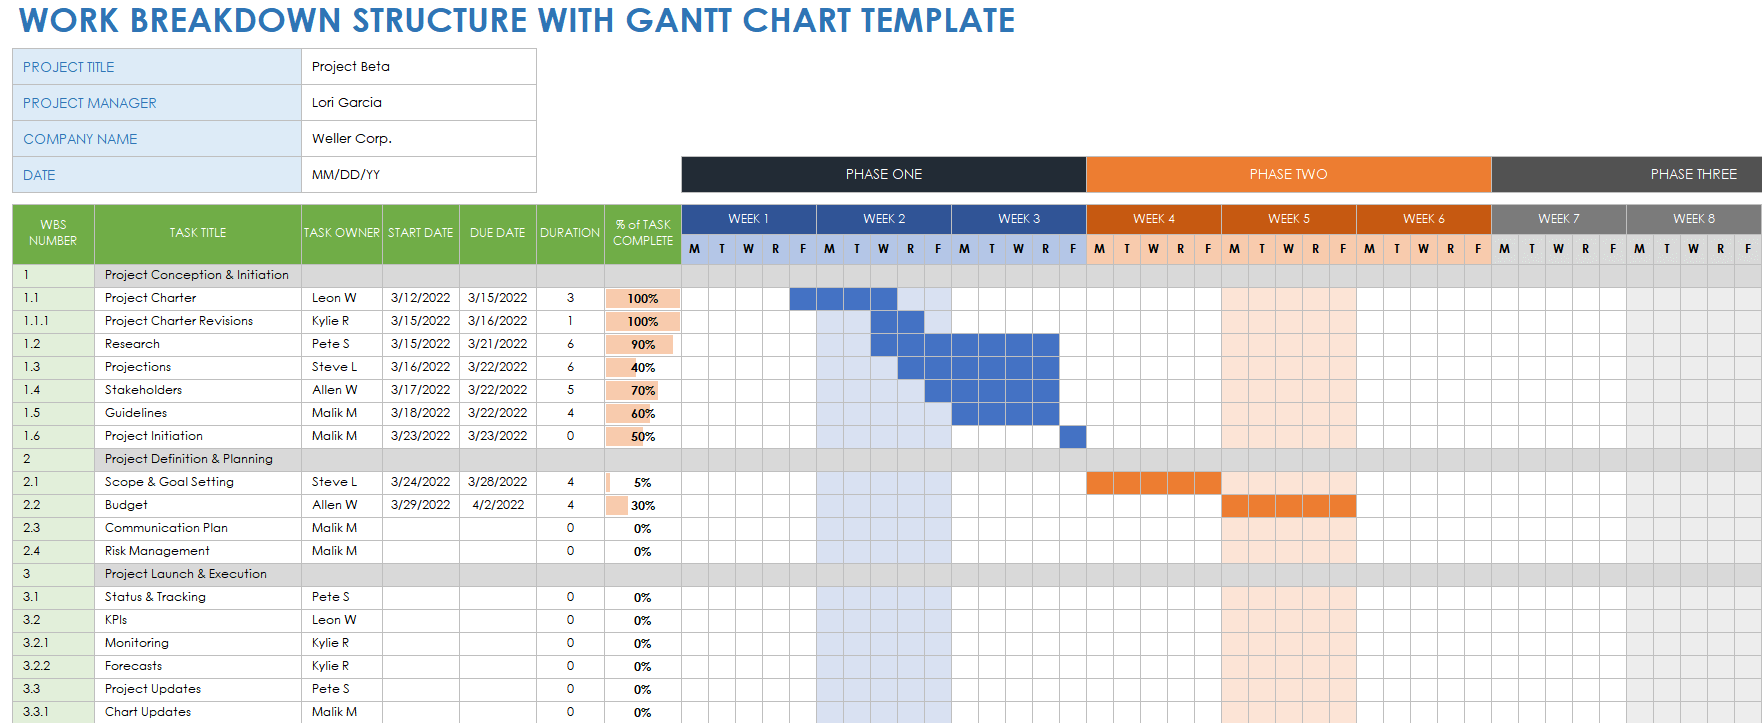 Work Breakdown Structure with Gantt Chart Template